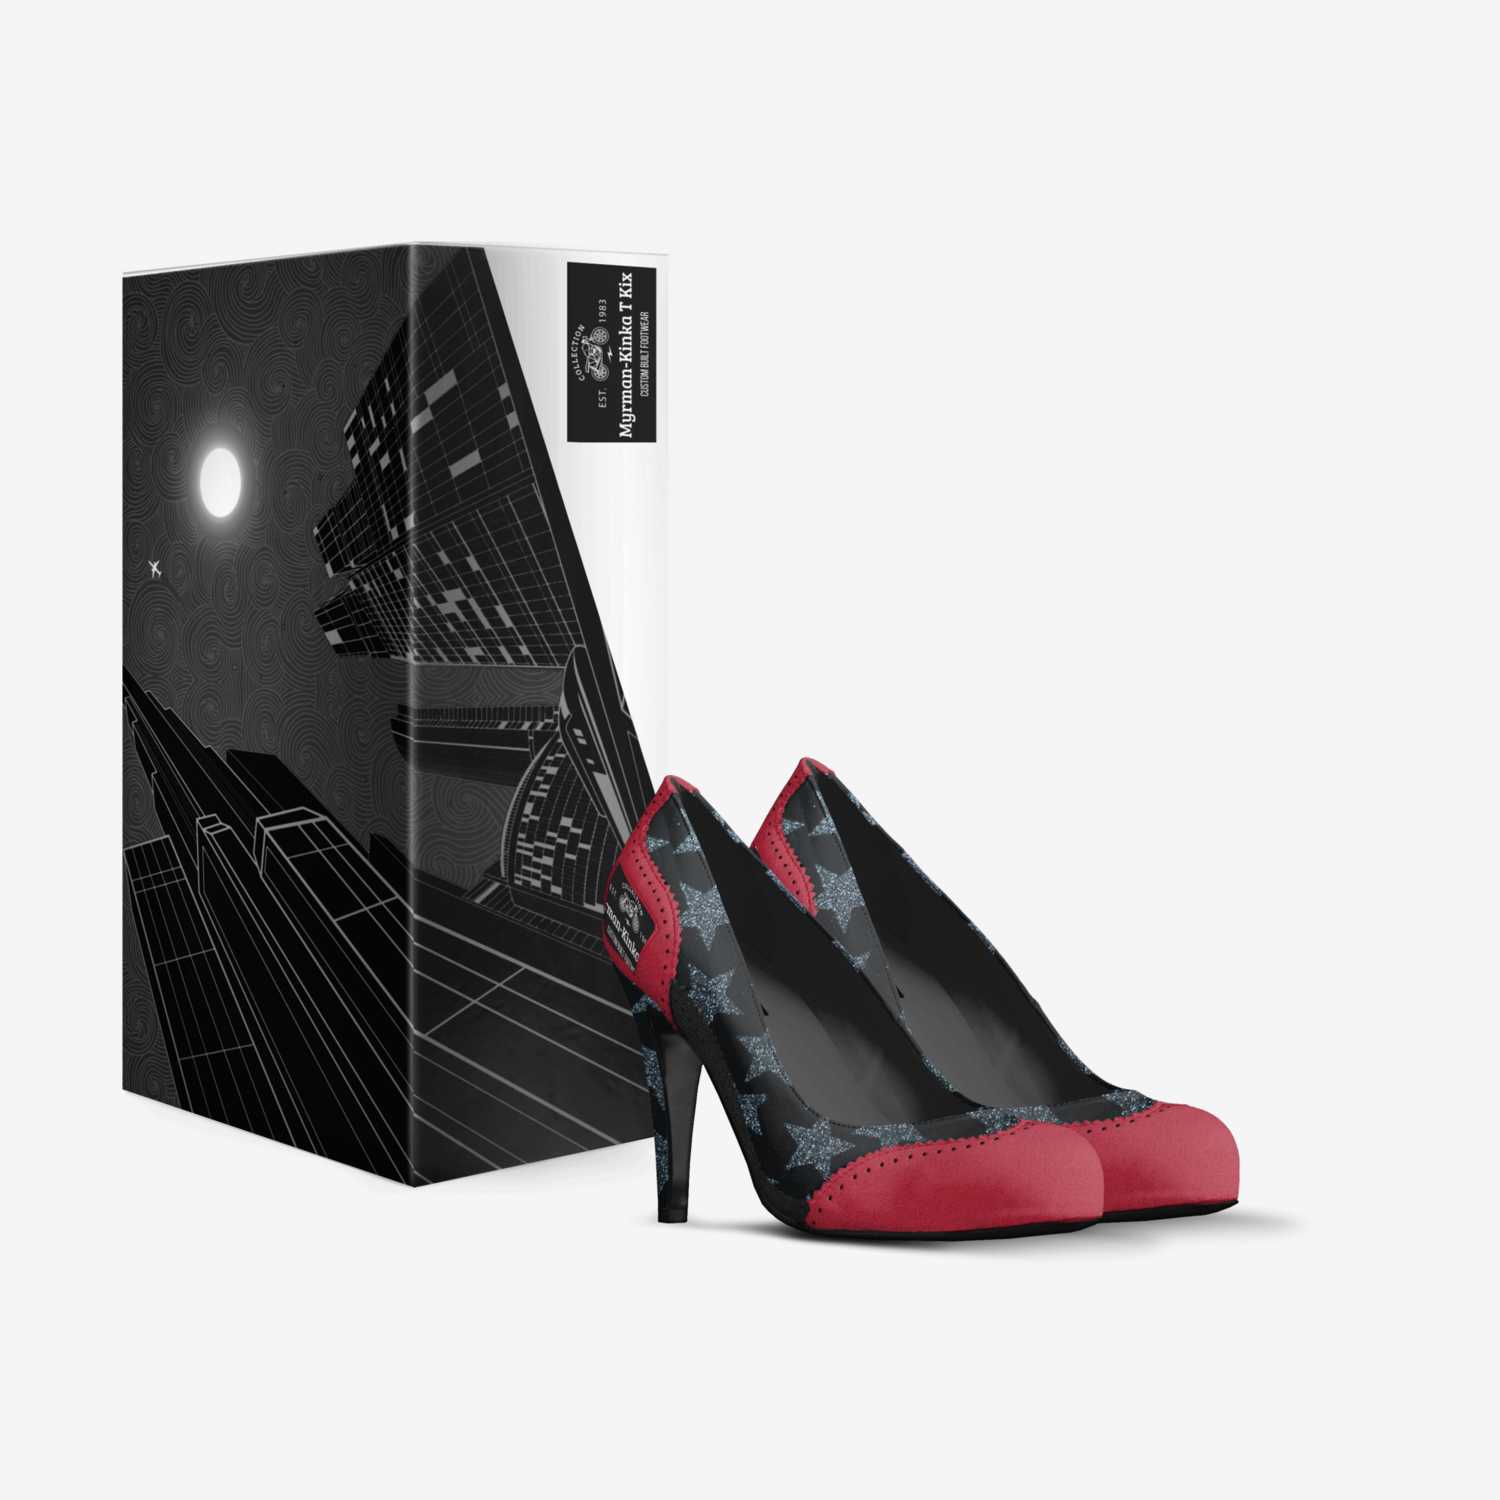 Myrman-Kinka T Kix custom made in Italy shoes by Kinka T Kix | Box view